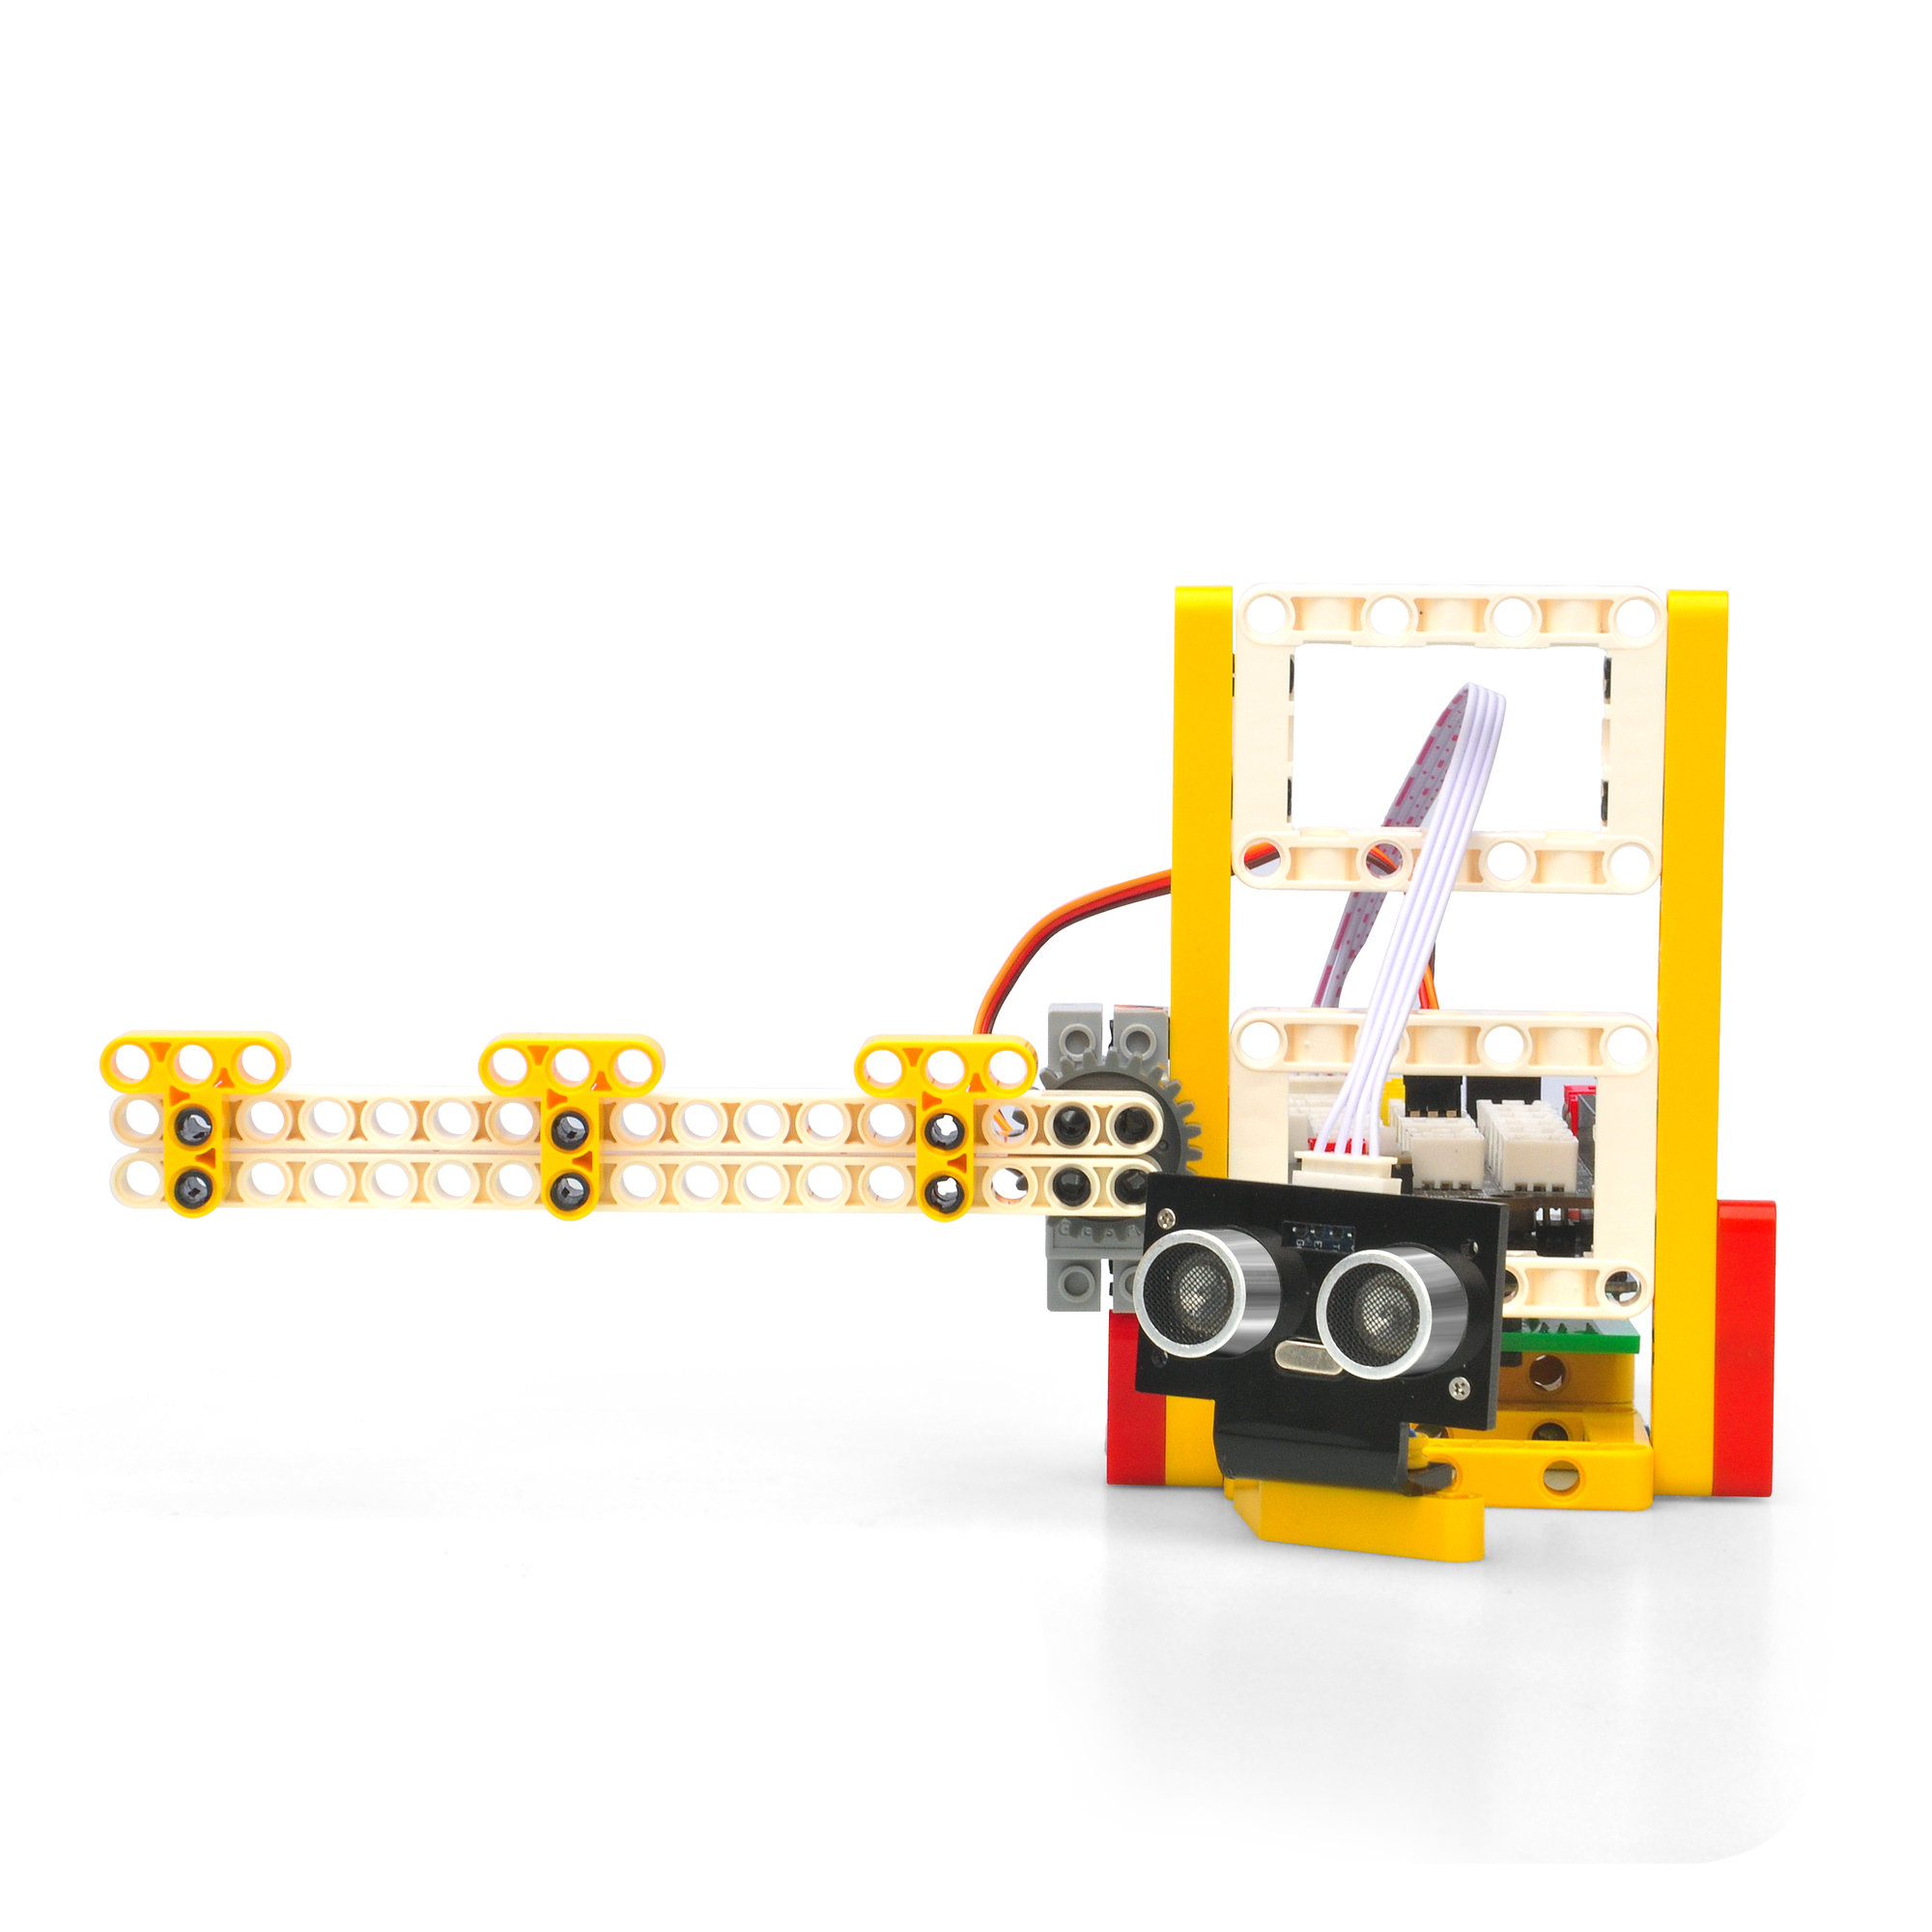 OSOYOO Building Block DIY Programming Kit for Arduino Lesson 1: Smart Gate